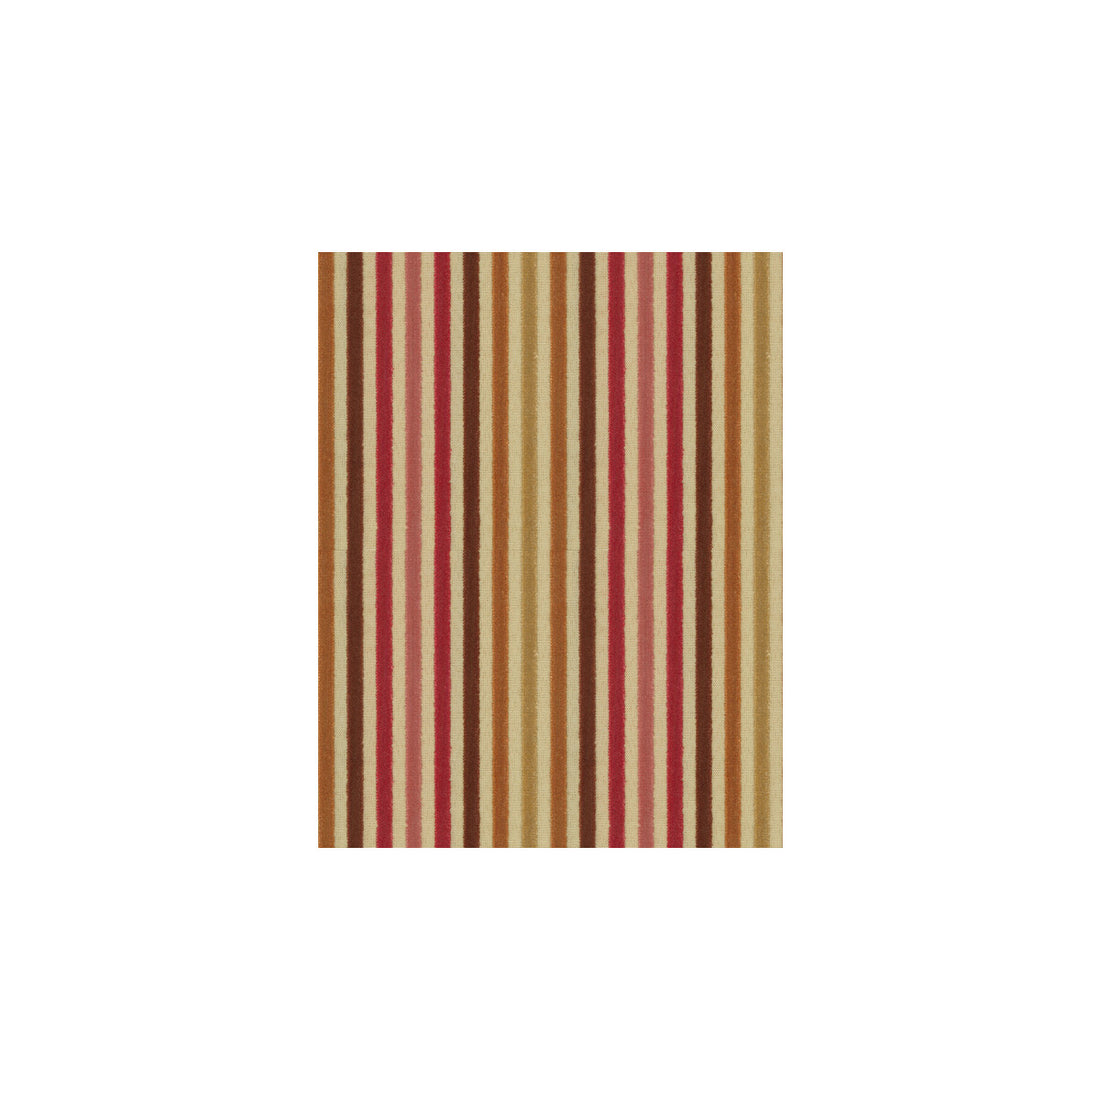 Kf Bas fabric - pattern 31517.924.0 - by Kravet Basics